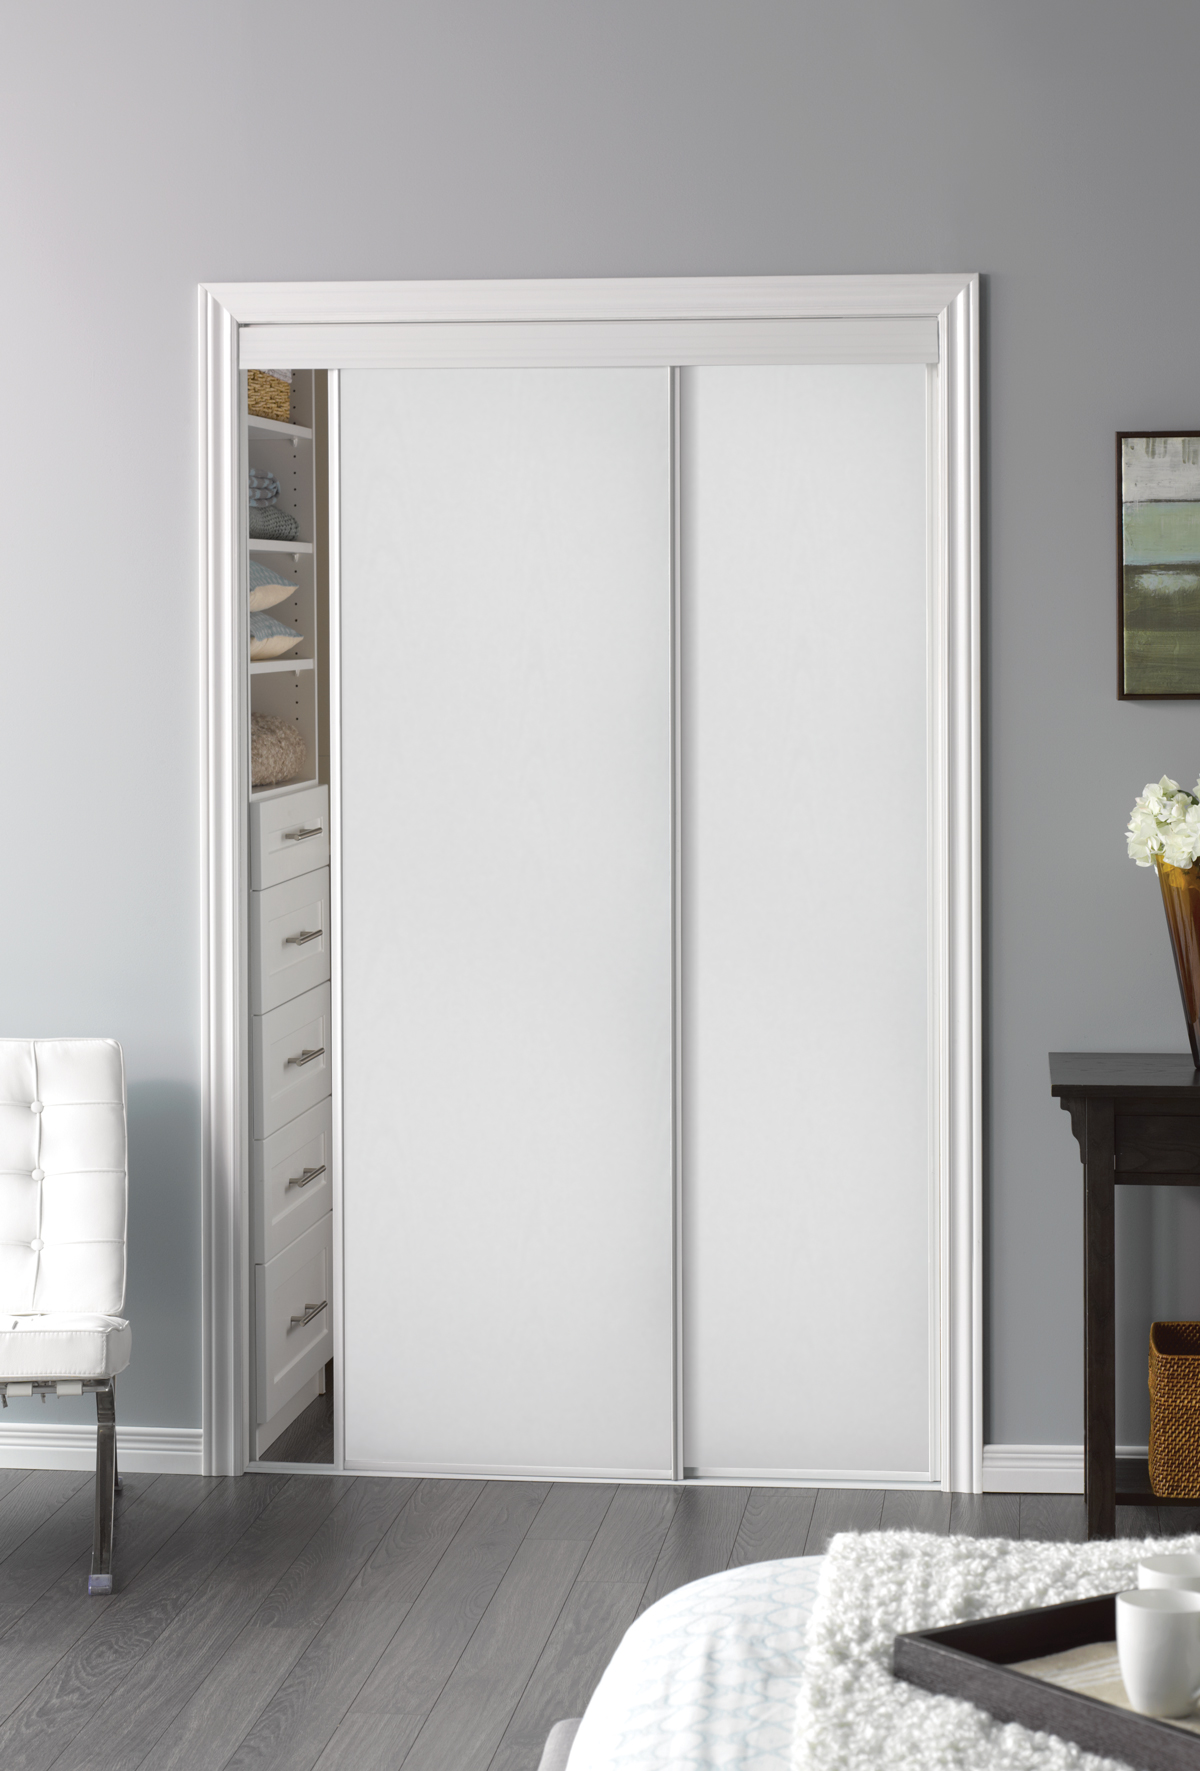 JJ Home Products | Customized Sliding Closet Doors